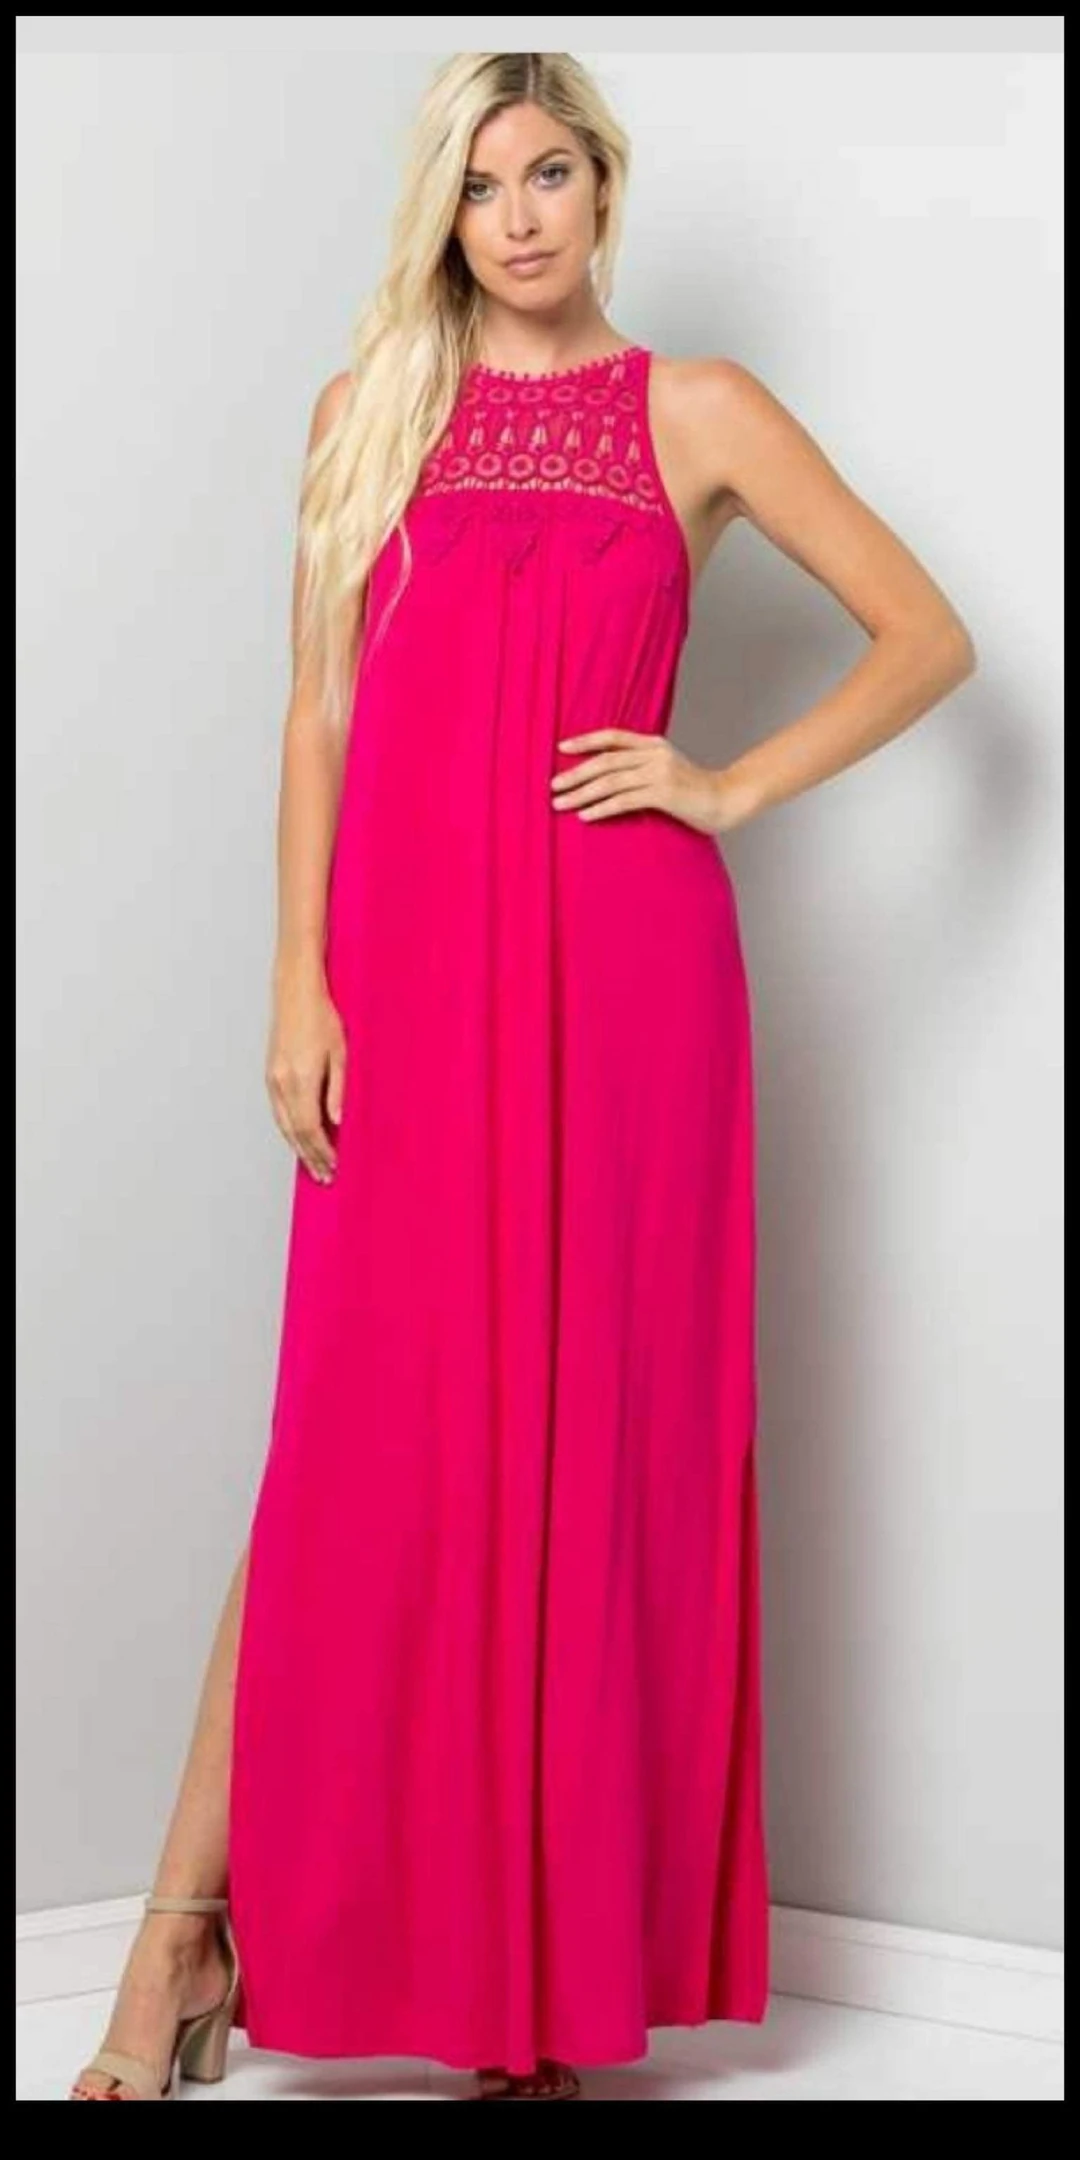 Daytona Hot Pink Maxi Dress